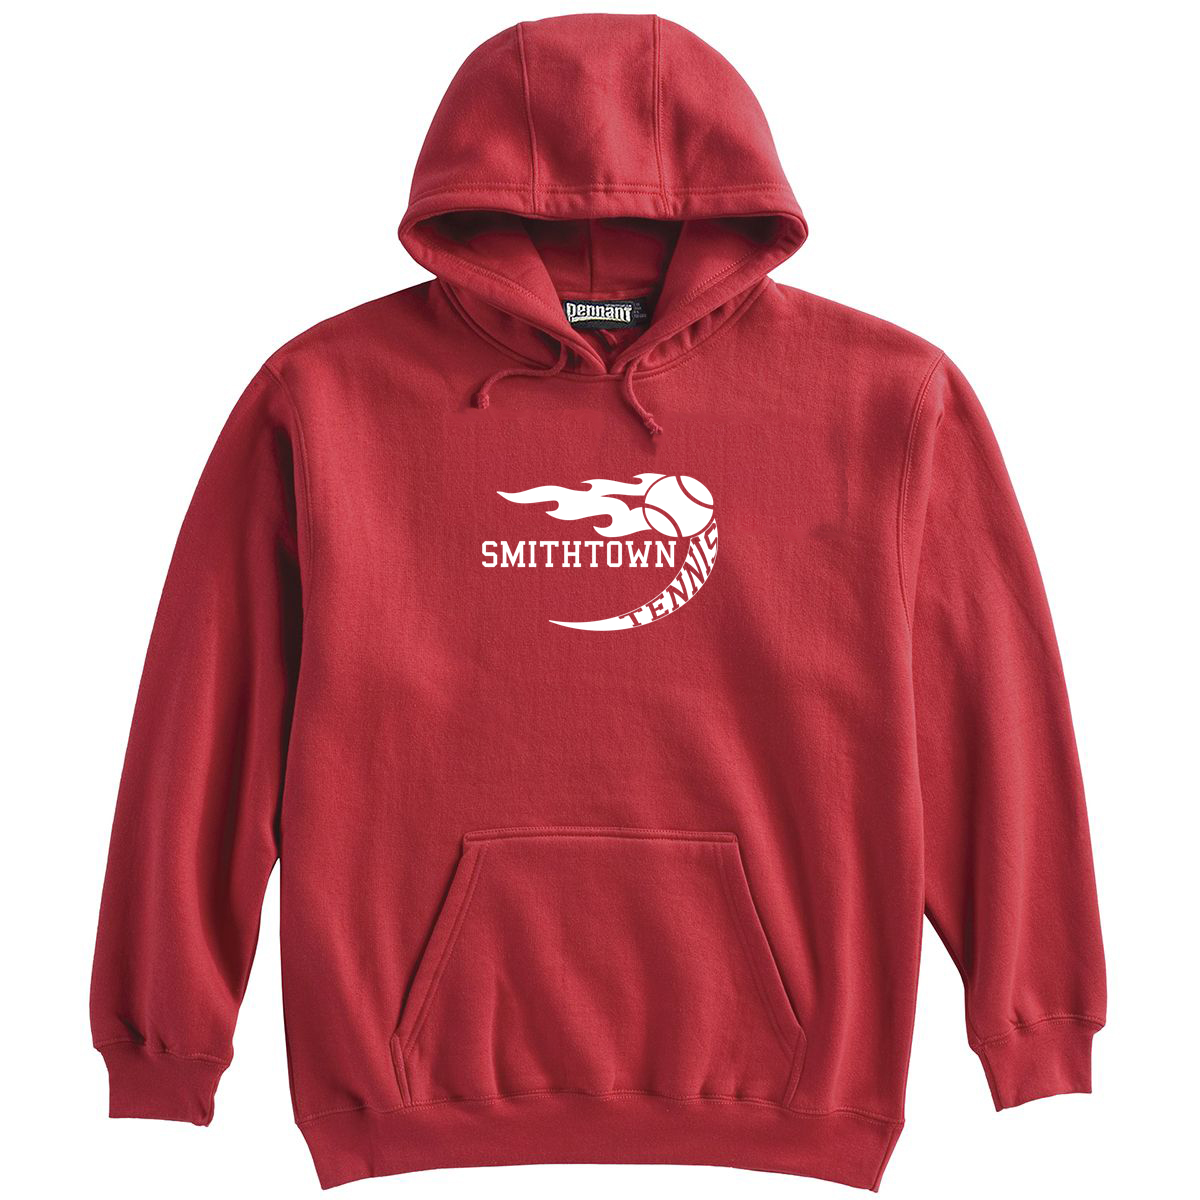 Smithtown Tennis Sweatshirt